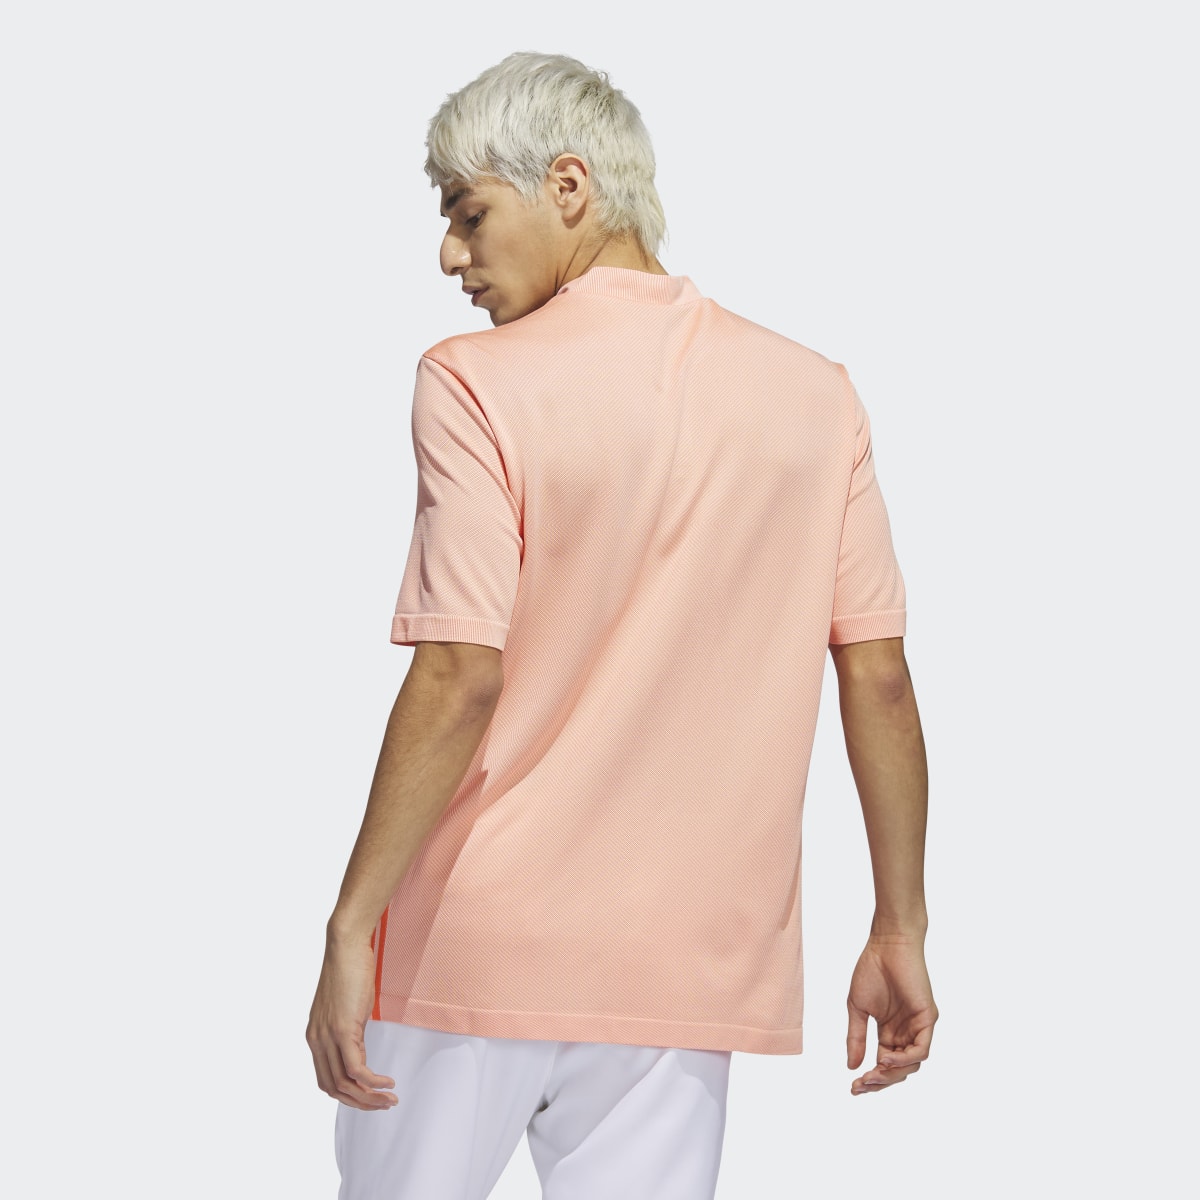 Adidas Made To Be Remade Henry Neck Seamless Golf Shirt. 4